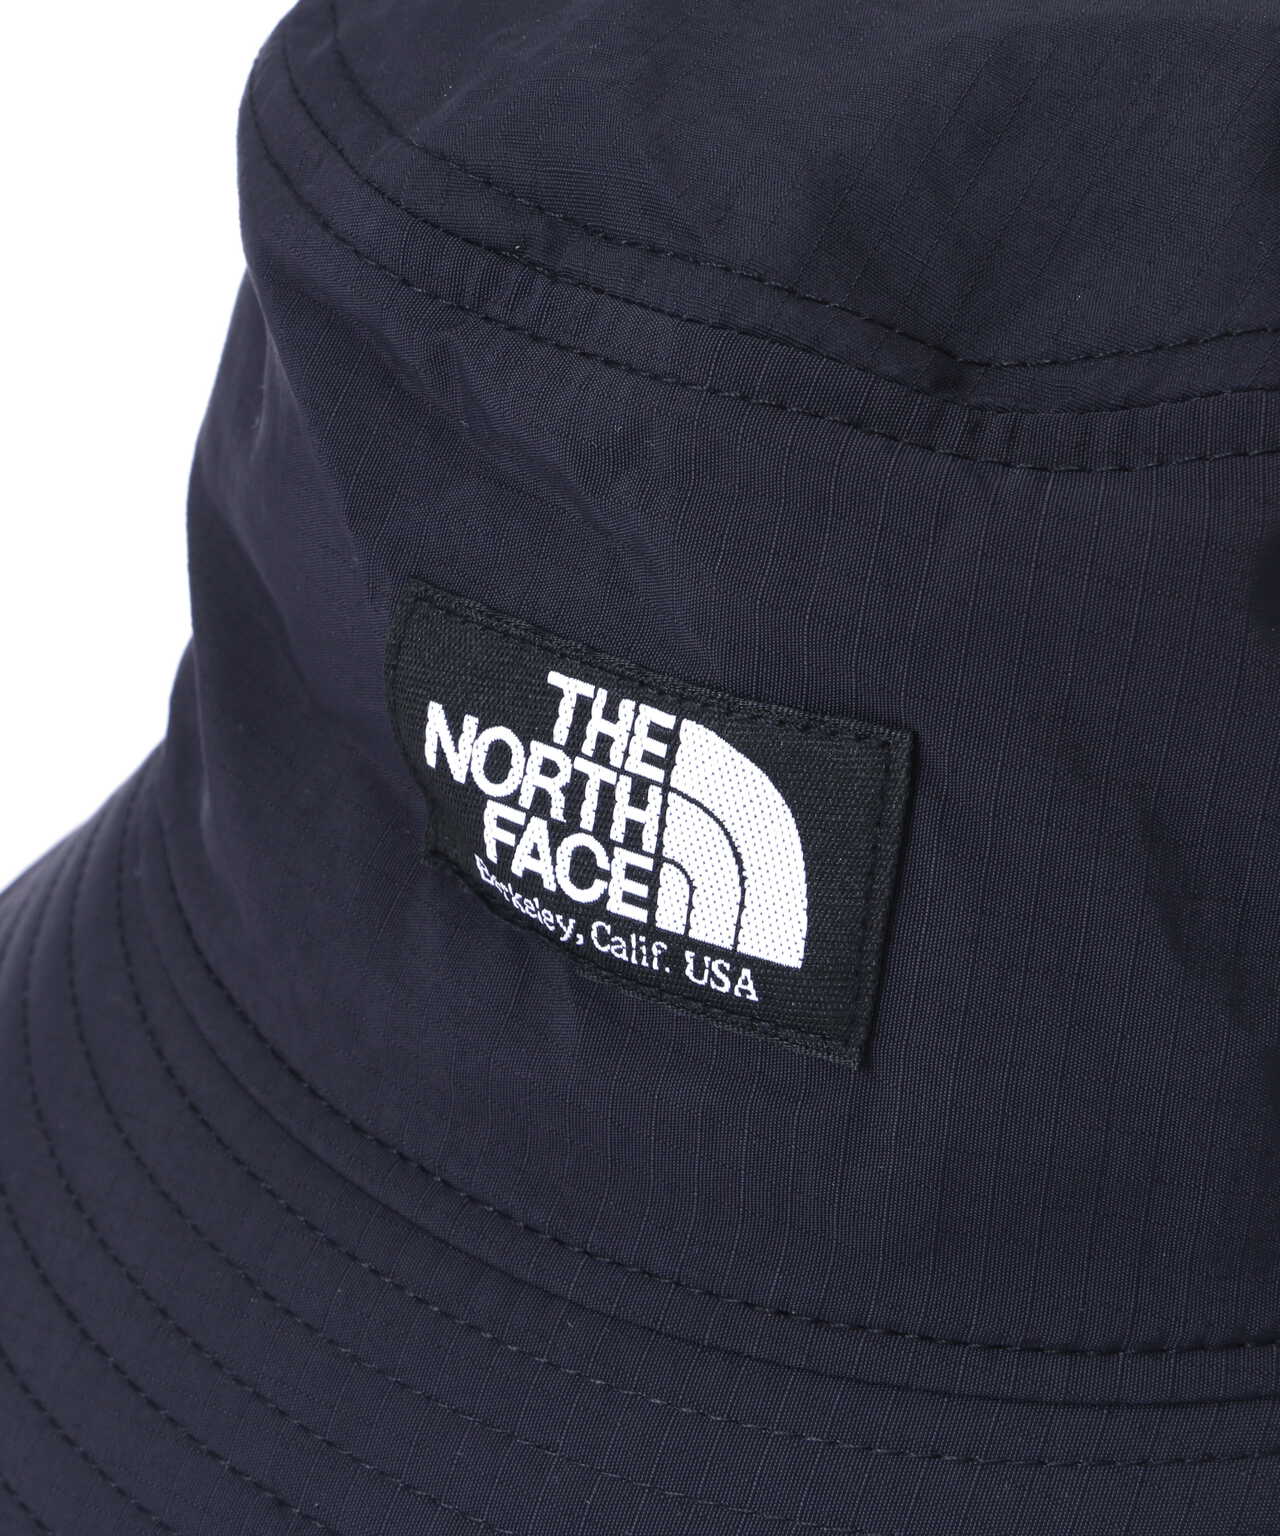 THE NORTH FACE/ザ・ノースフェイス/Camp Side Hat/キャンプサイドハット